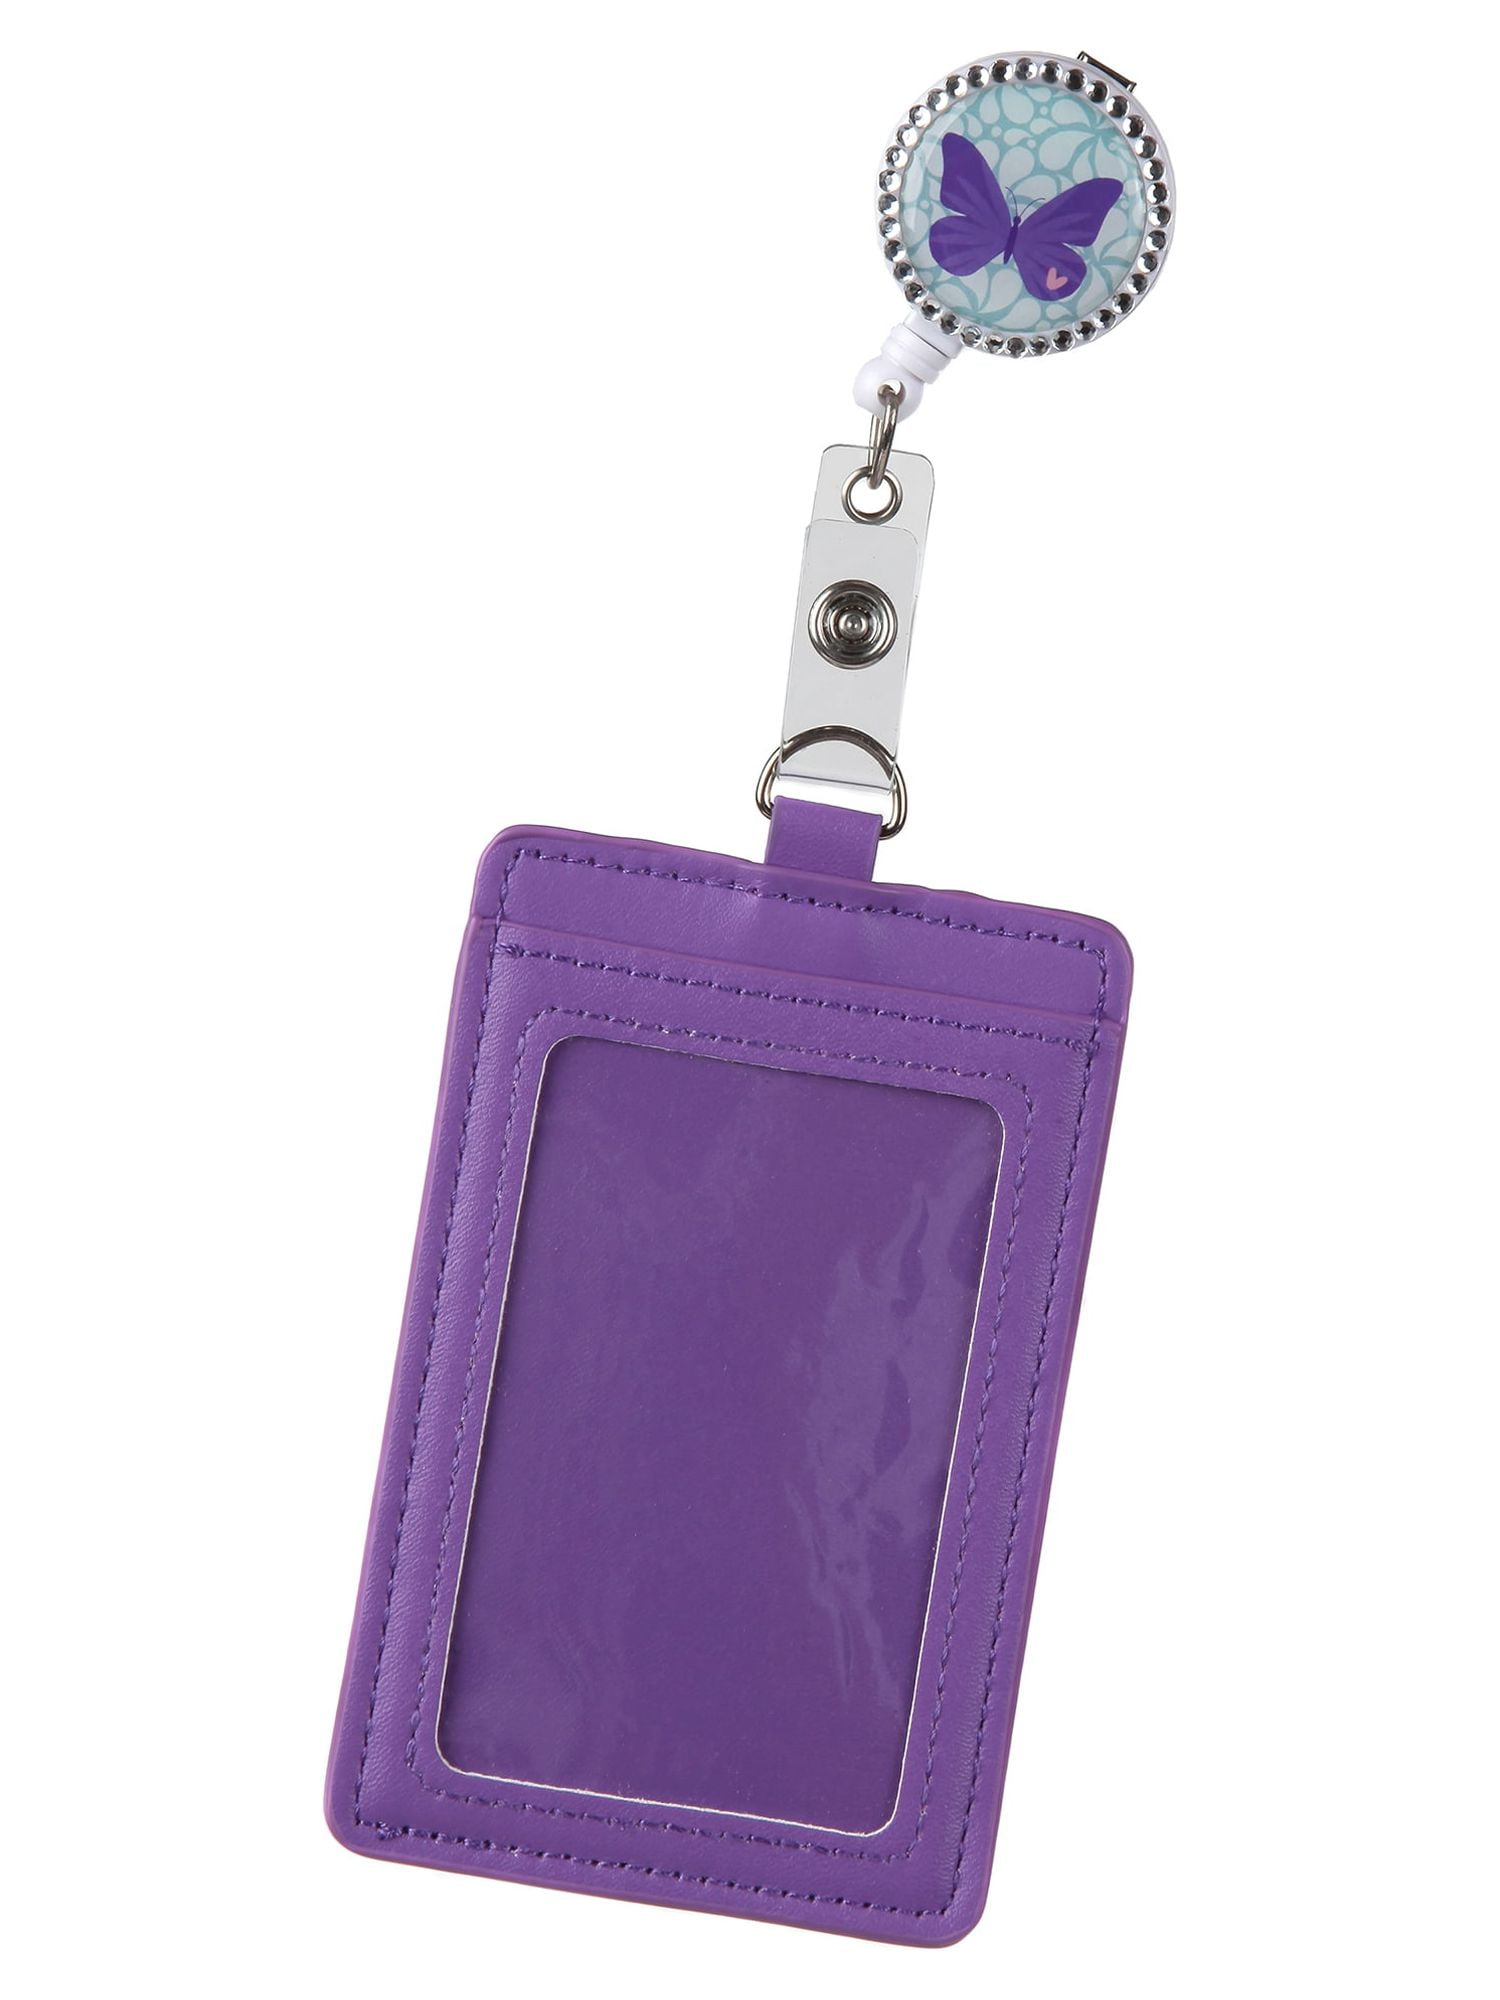 PR ESSENTIALS Brand Women's Adult Badge Reel with Purple Butterfly